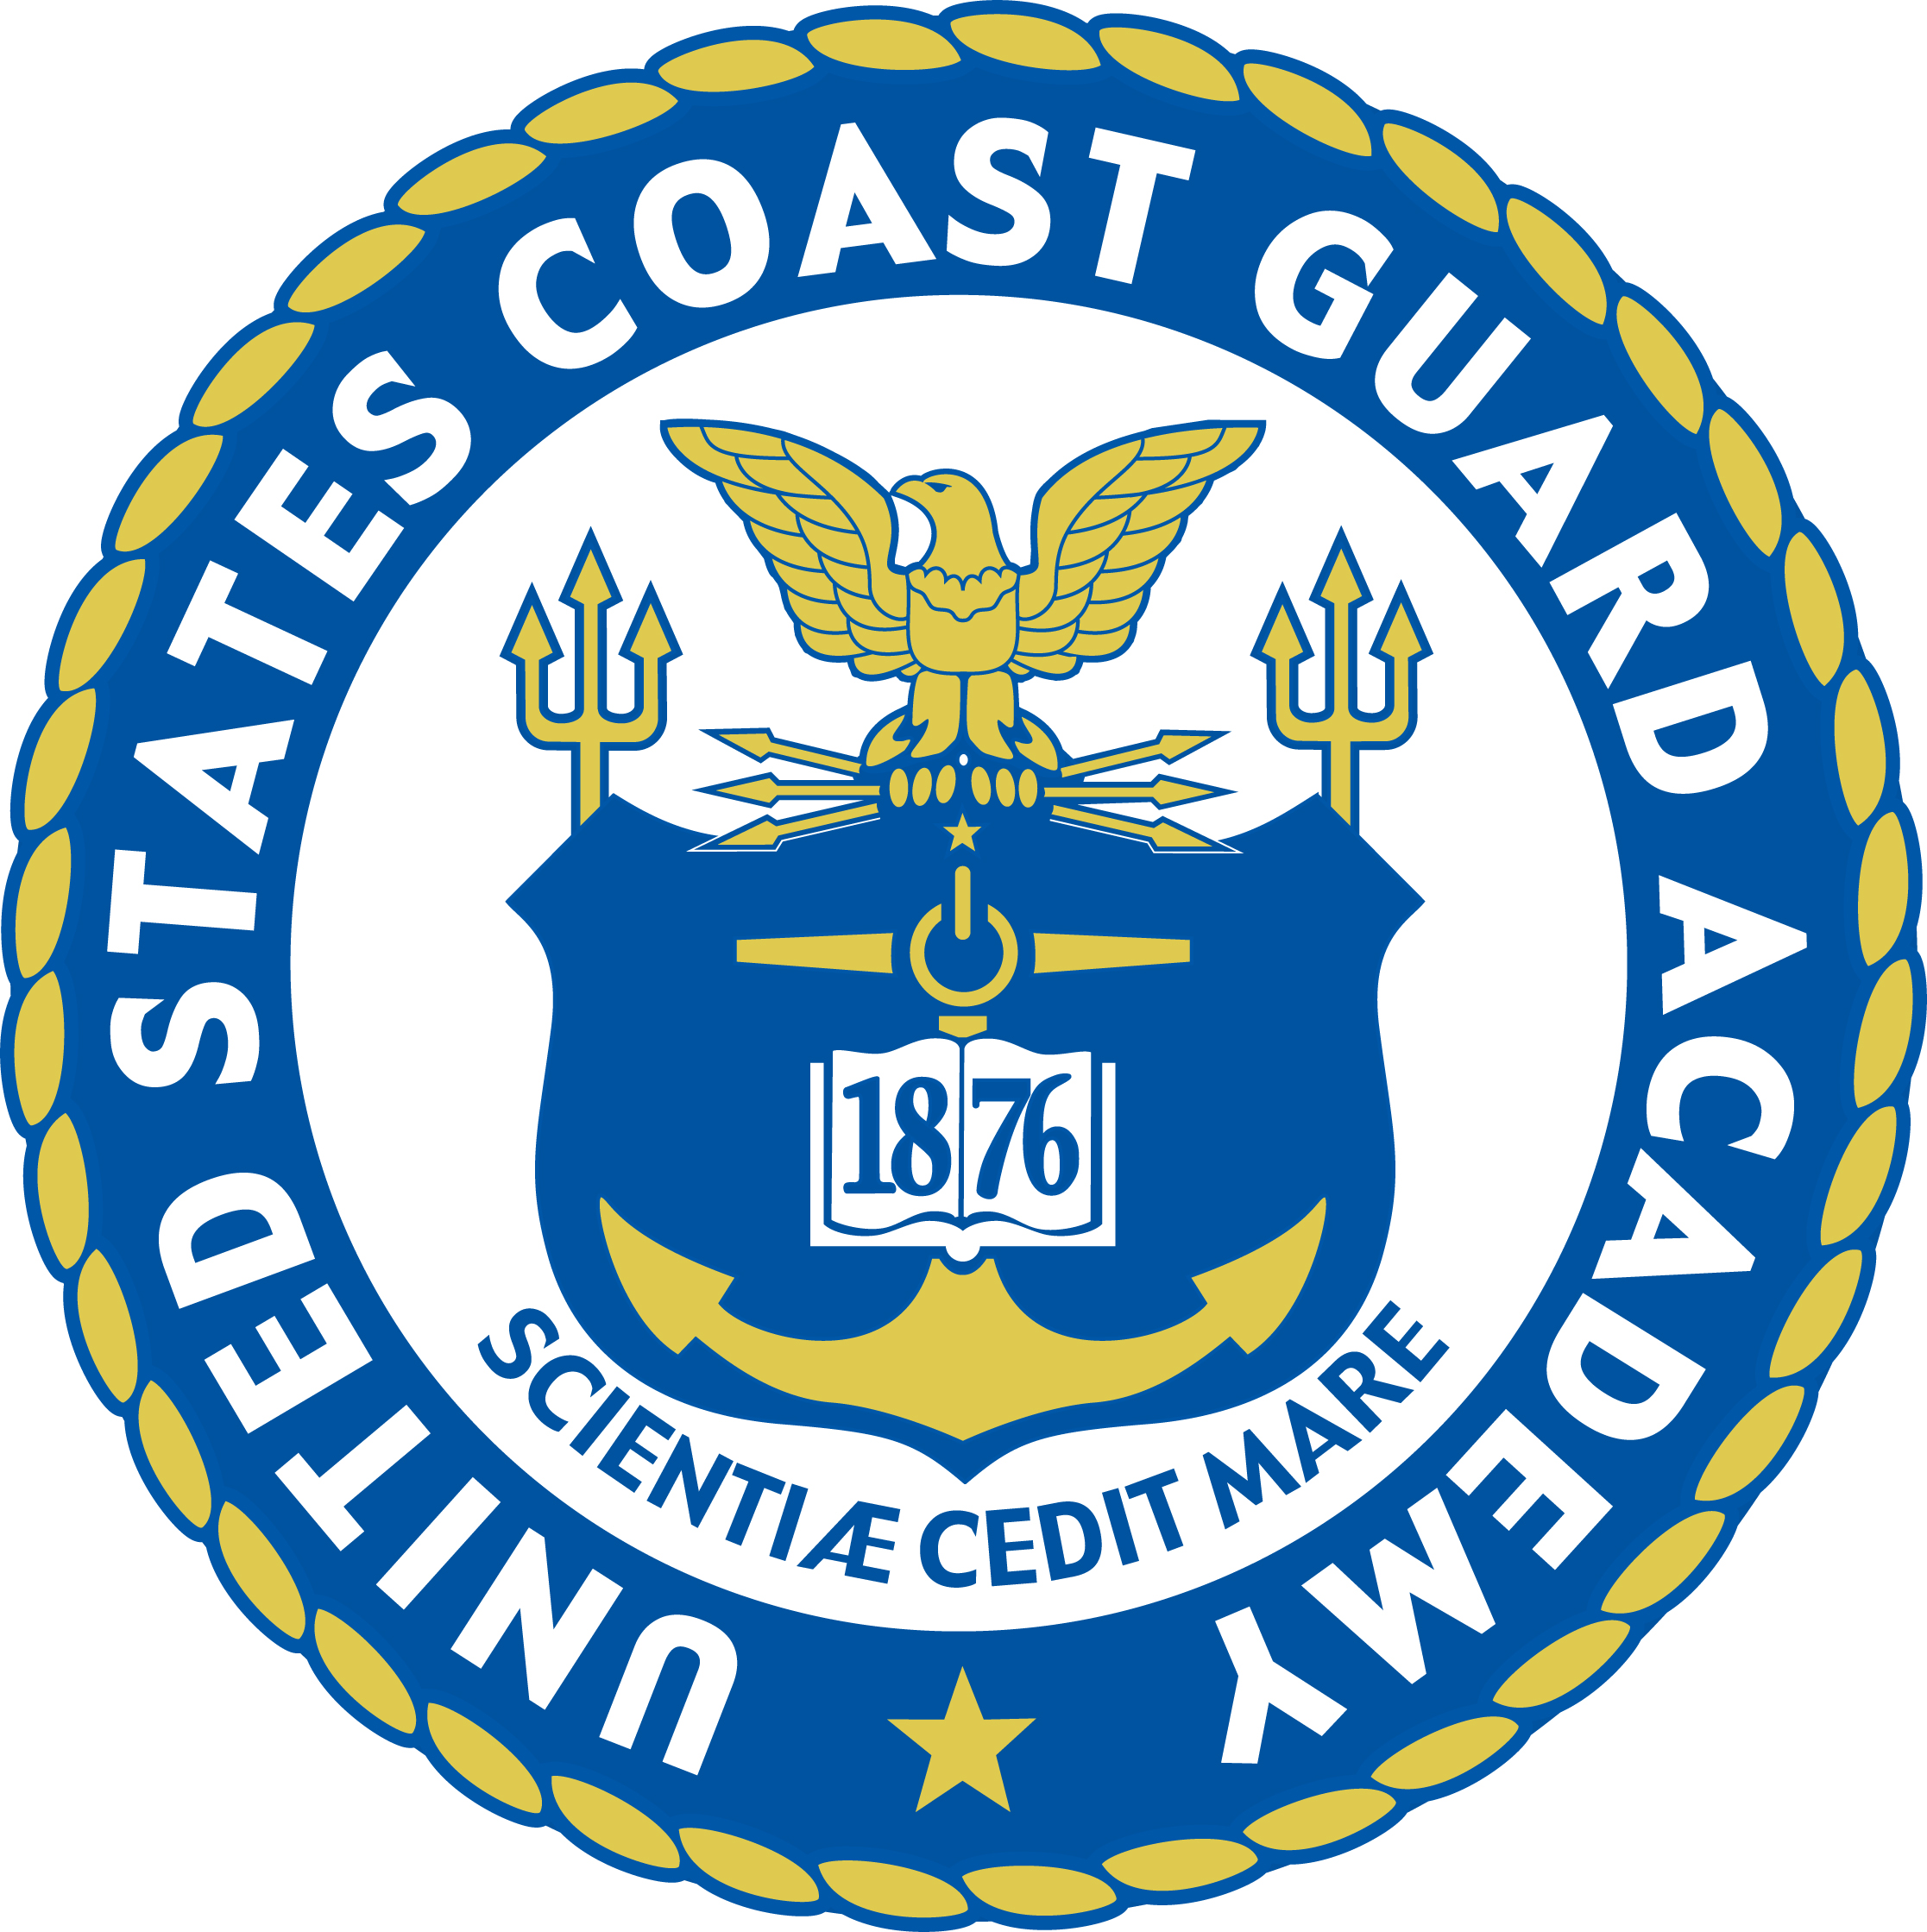 http://upload.wikimedia.org/wikipedia/commons/f/fe/United_States_Coast_Guard_Academy_seal.jpg